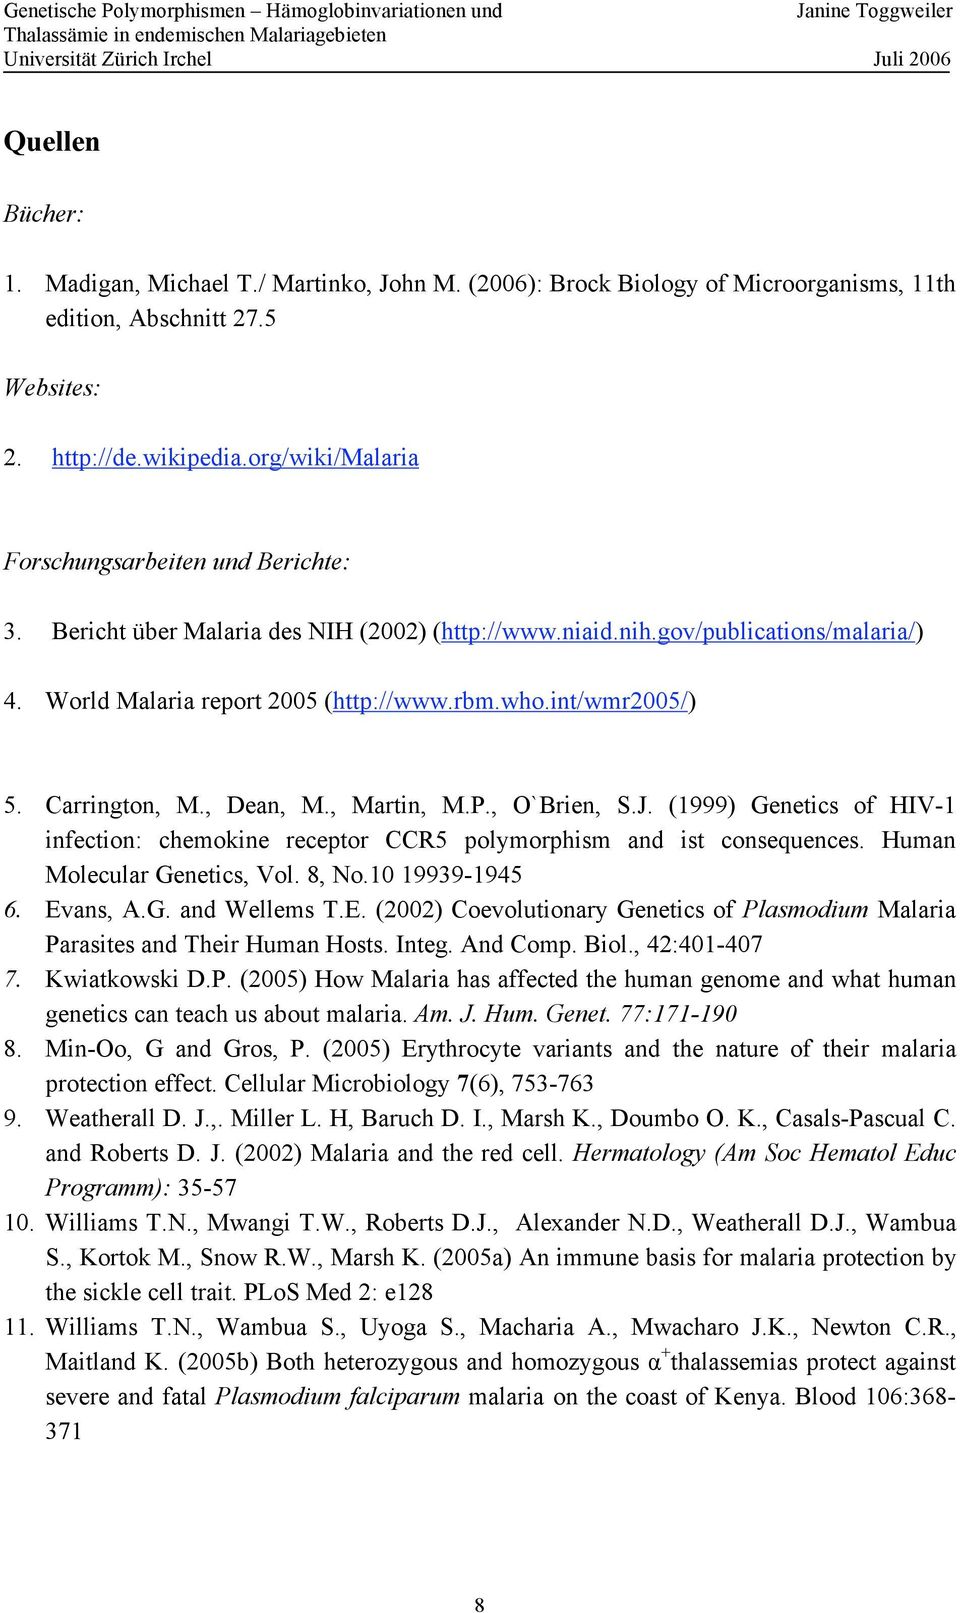 int/wmr2005/) 5. Carrington, M., Dean, M., Martin, M.P., O`Brien, S.J. (1999) Genetics of HIV-1 infection: chemokine receptor CCR5 polymorphism and ist consequences. Human Molecular Genetics, Vol.